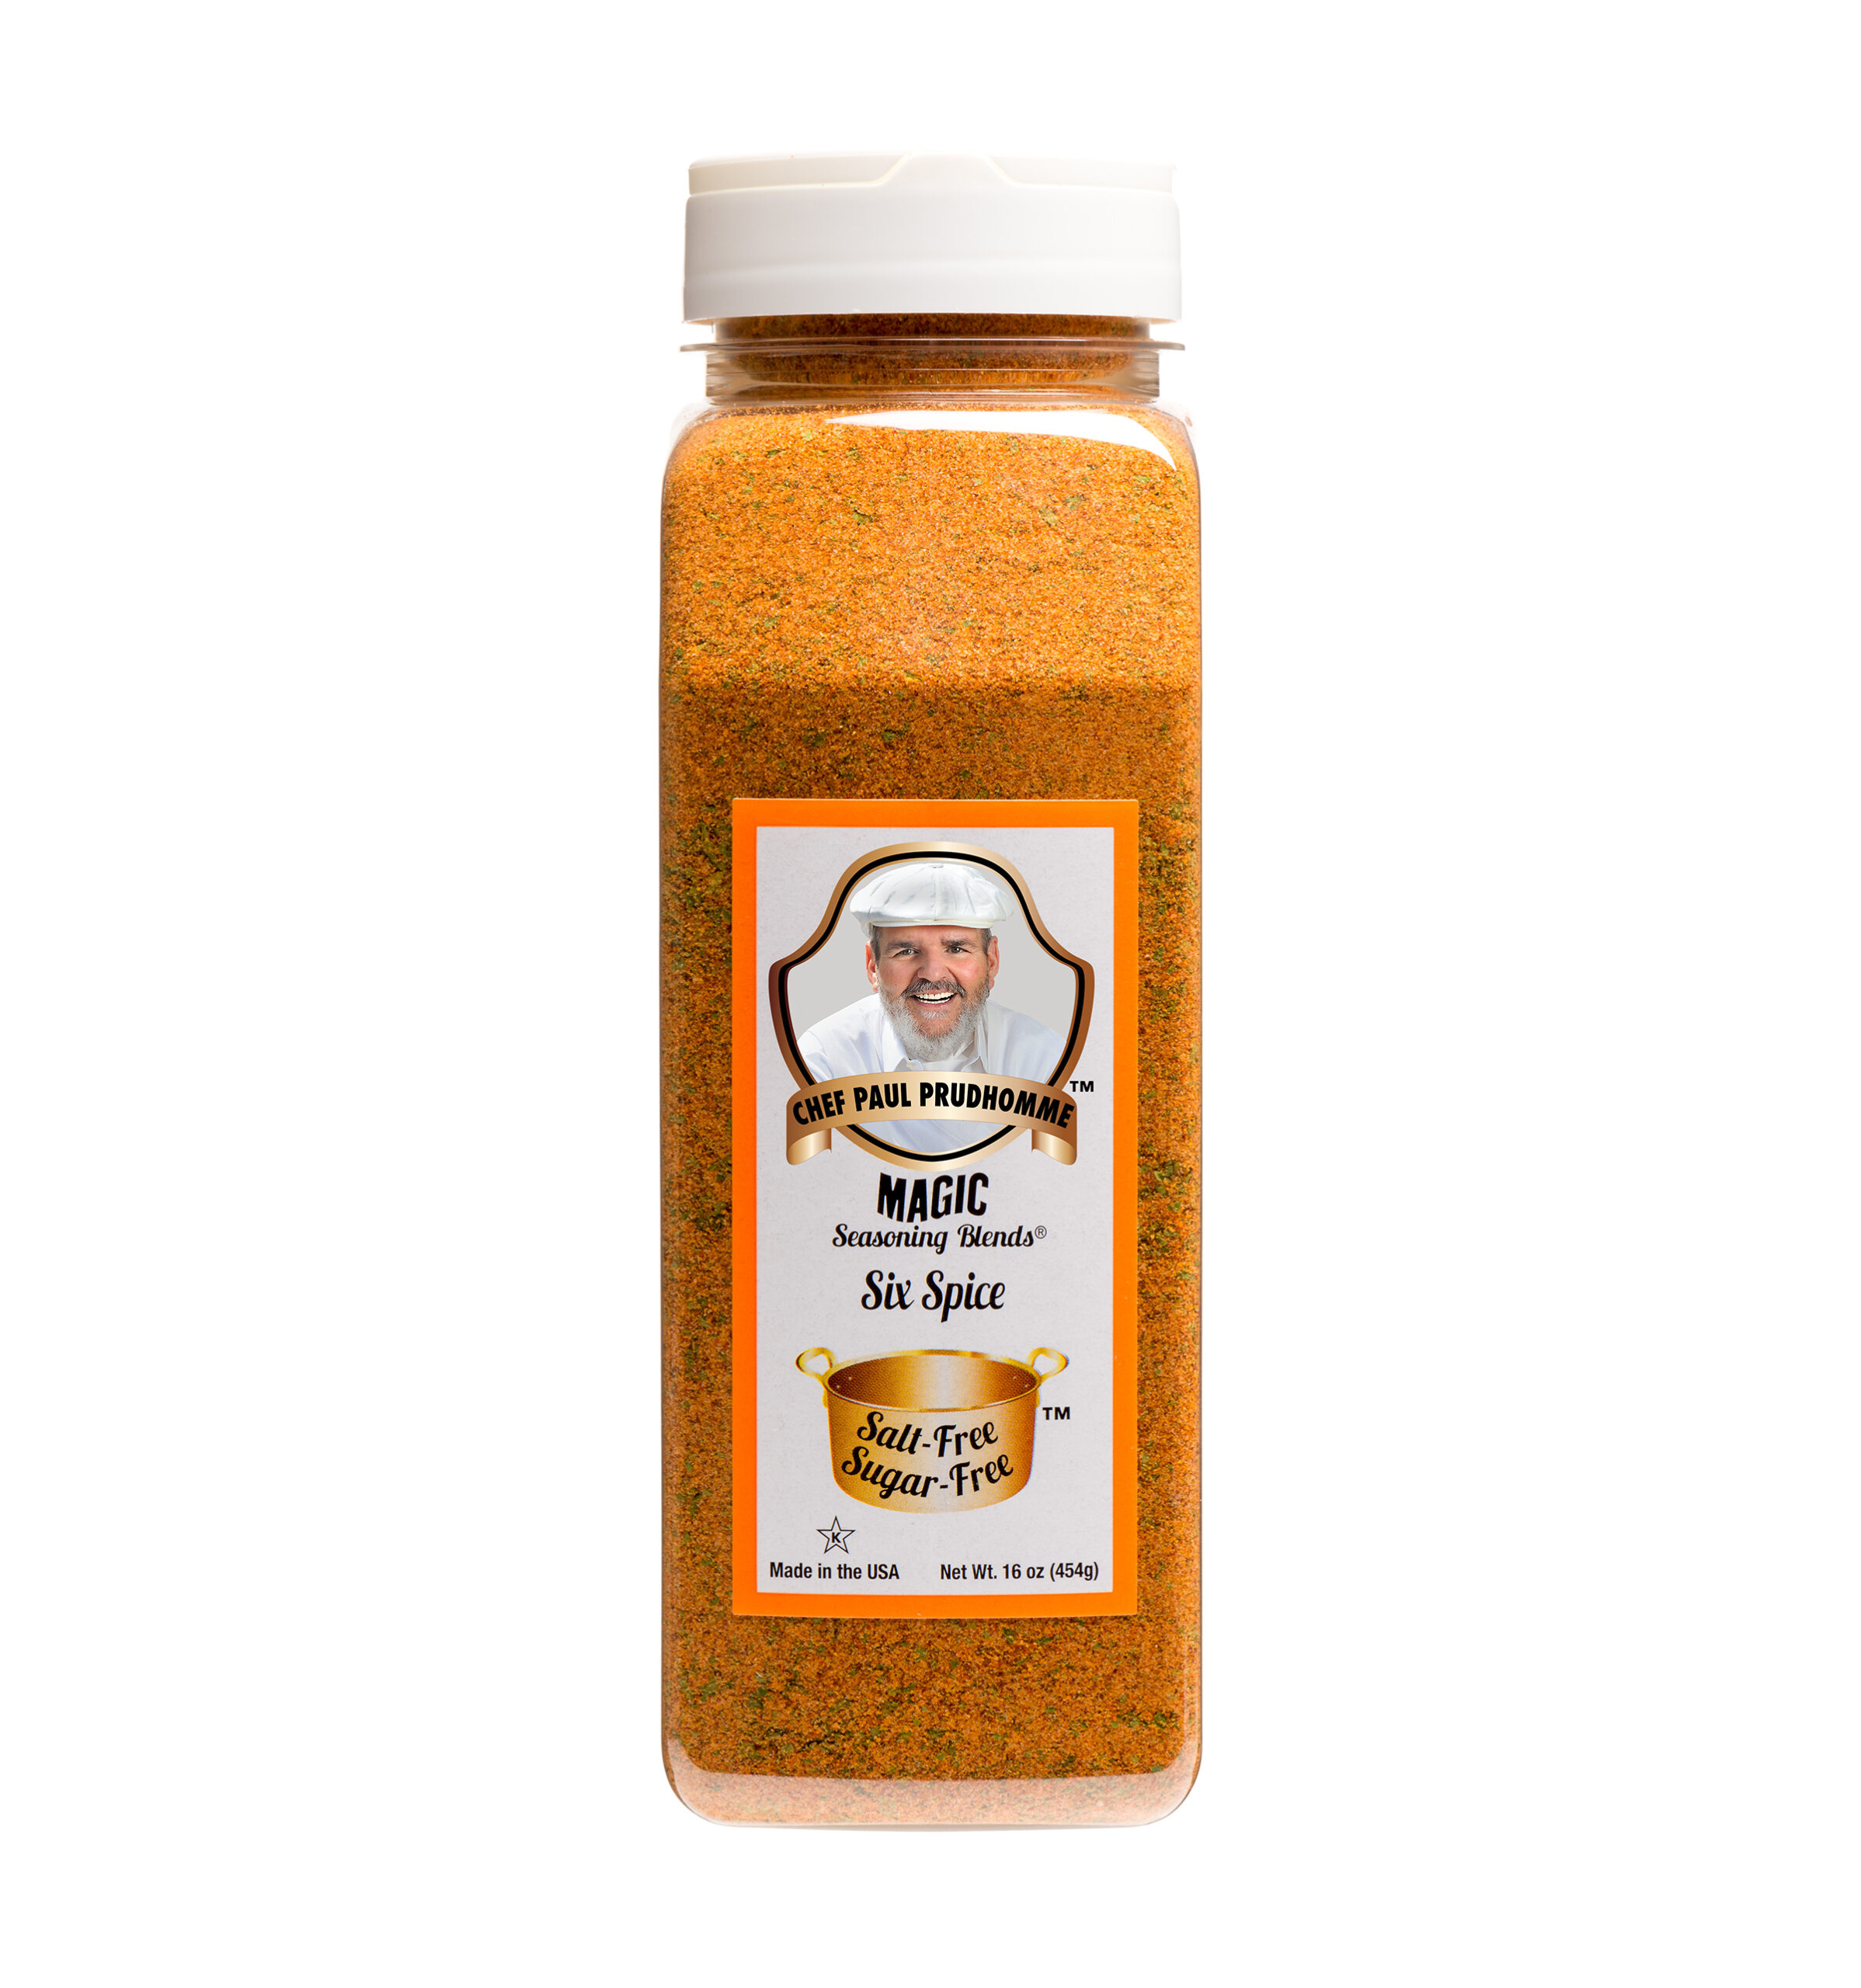 Salt-Free Sugar-Free: Six Spice 16 oz. Shaker - Magic Seasoning Blends